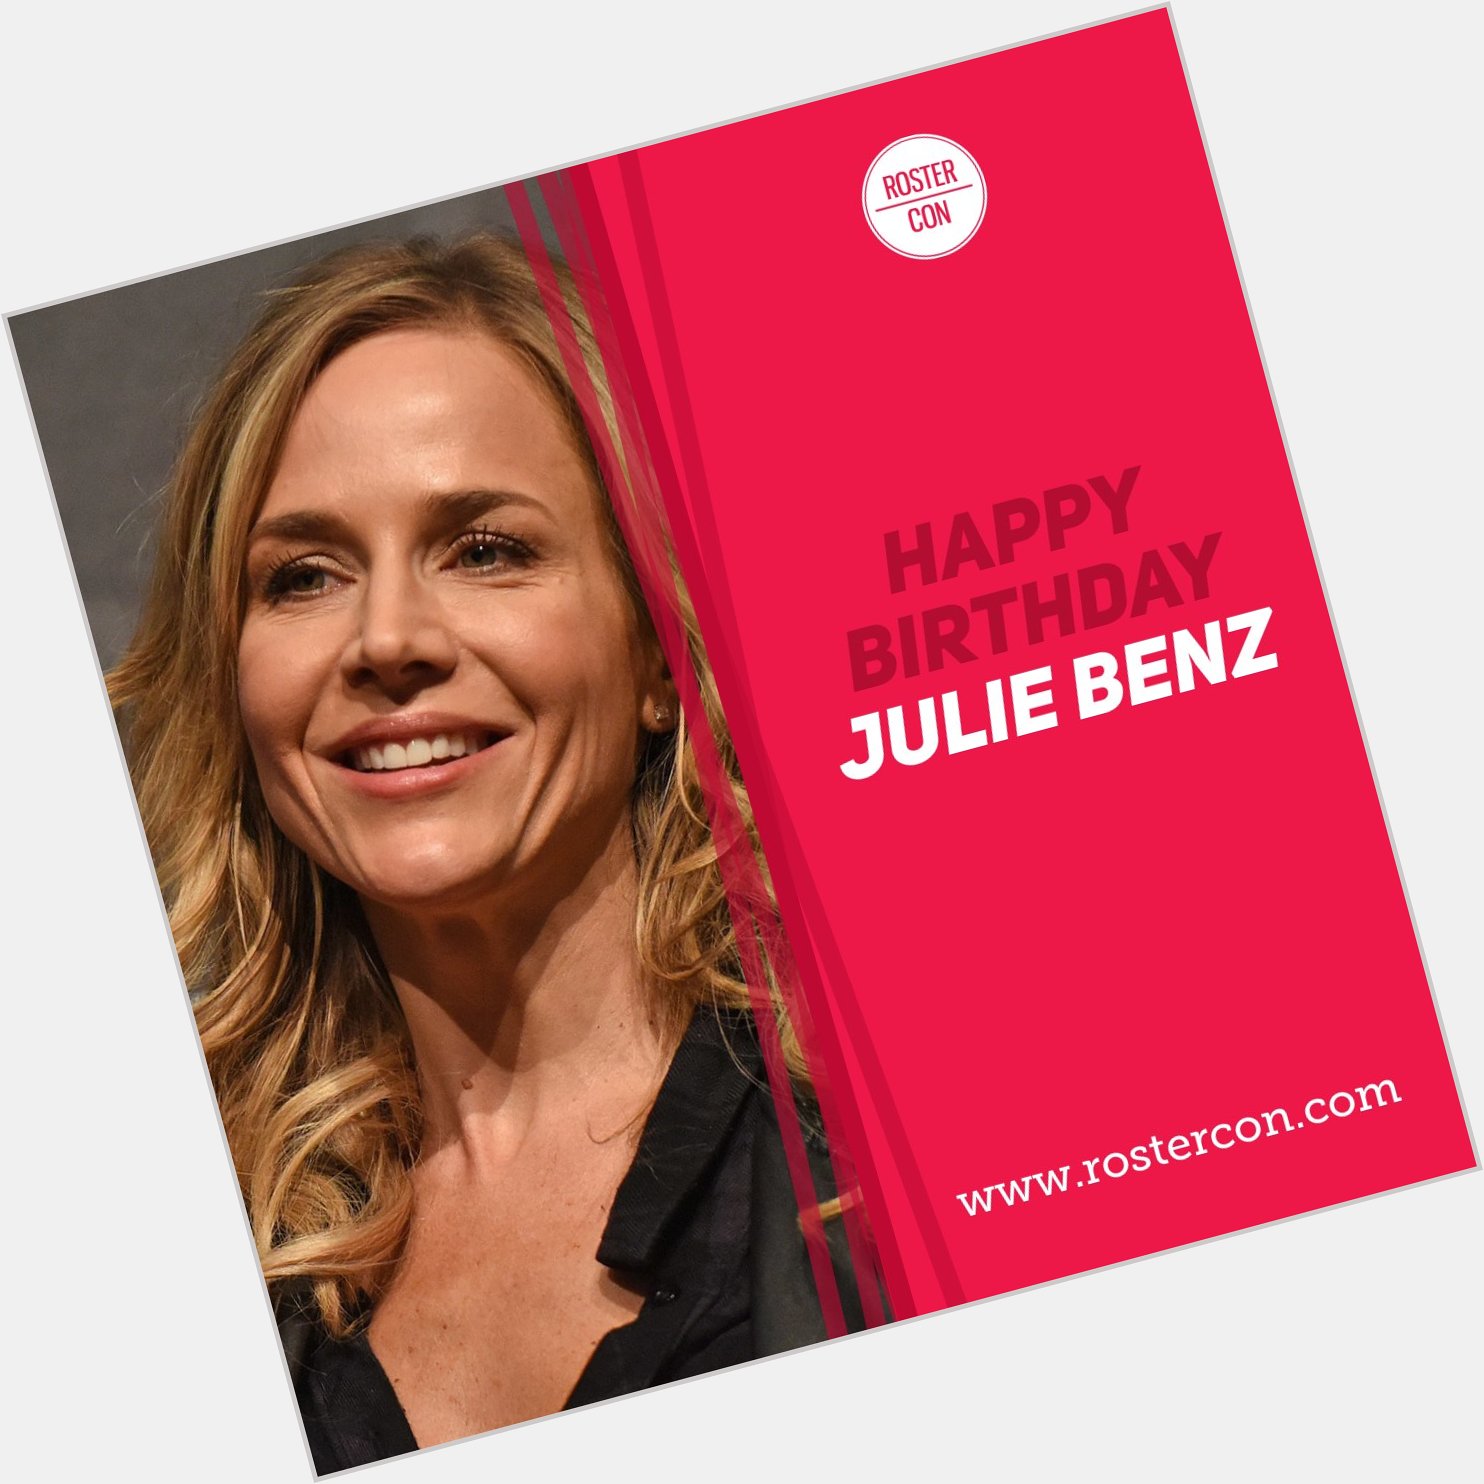  Happy Birthday Julie Benz ! Souvenirs / Throwback :  